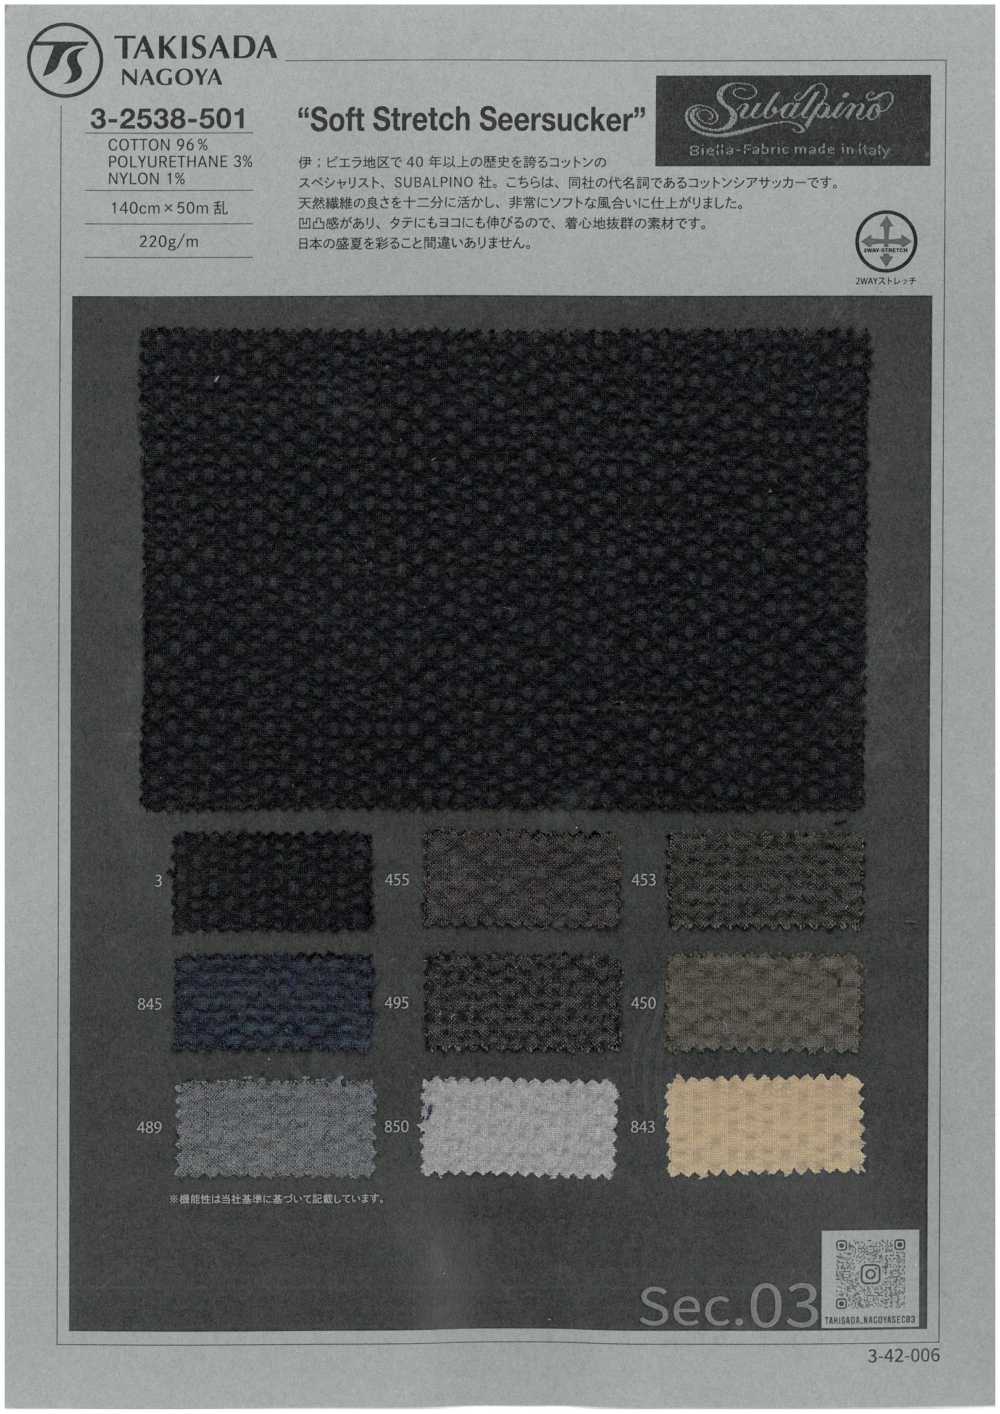 3-2538-501 SUBALPINO Soft Stretch Seersucker No Pattern[Textile / Fabric] Takisada Nagoya